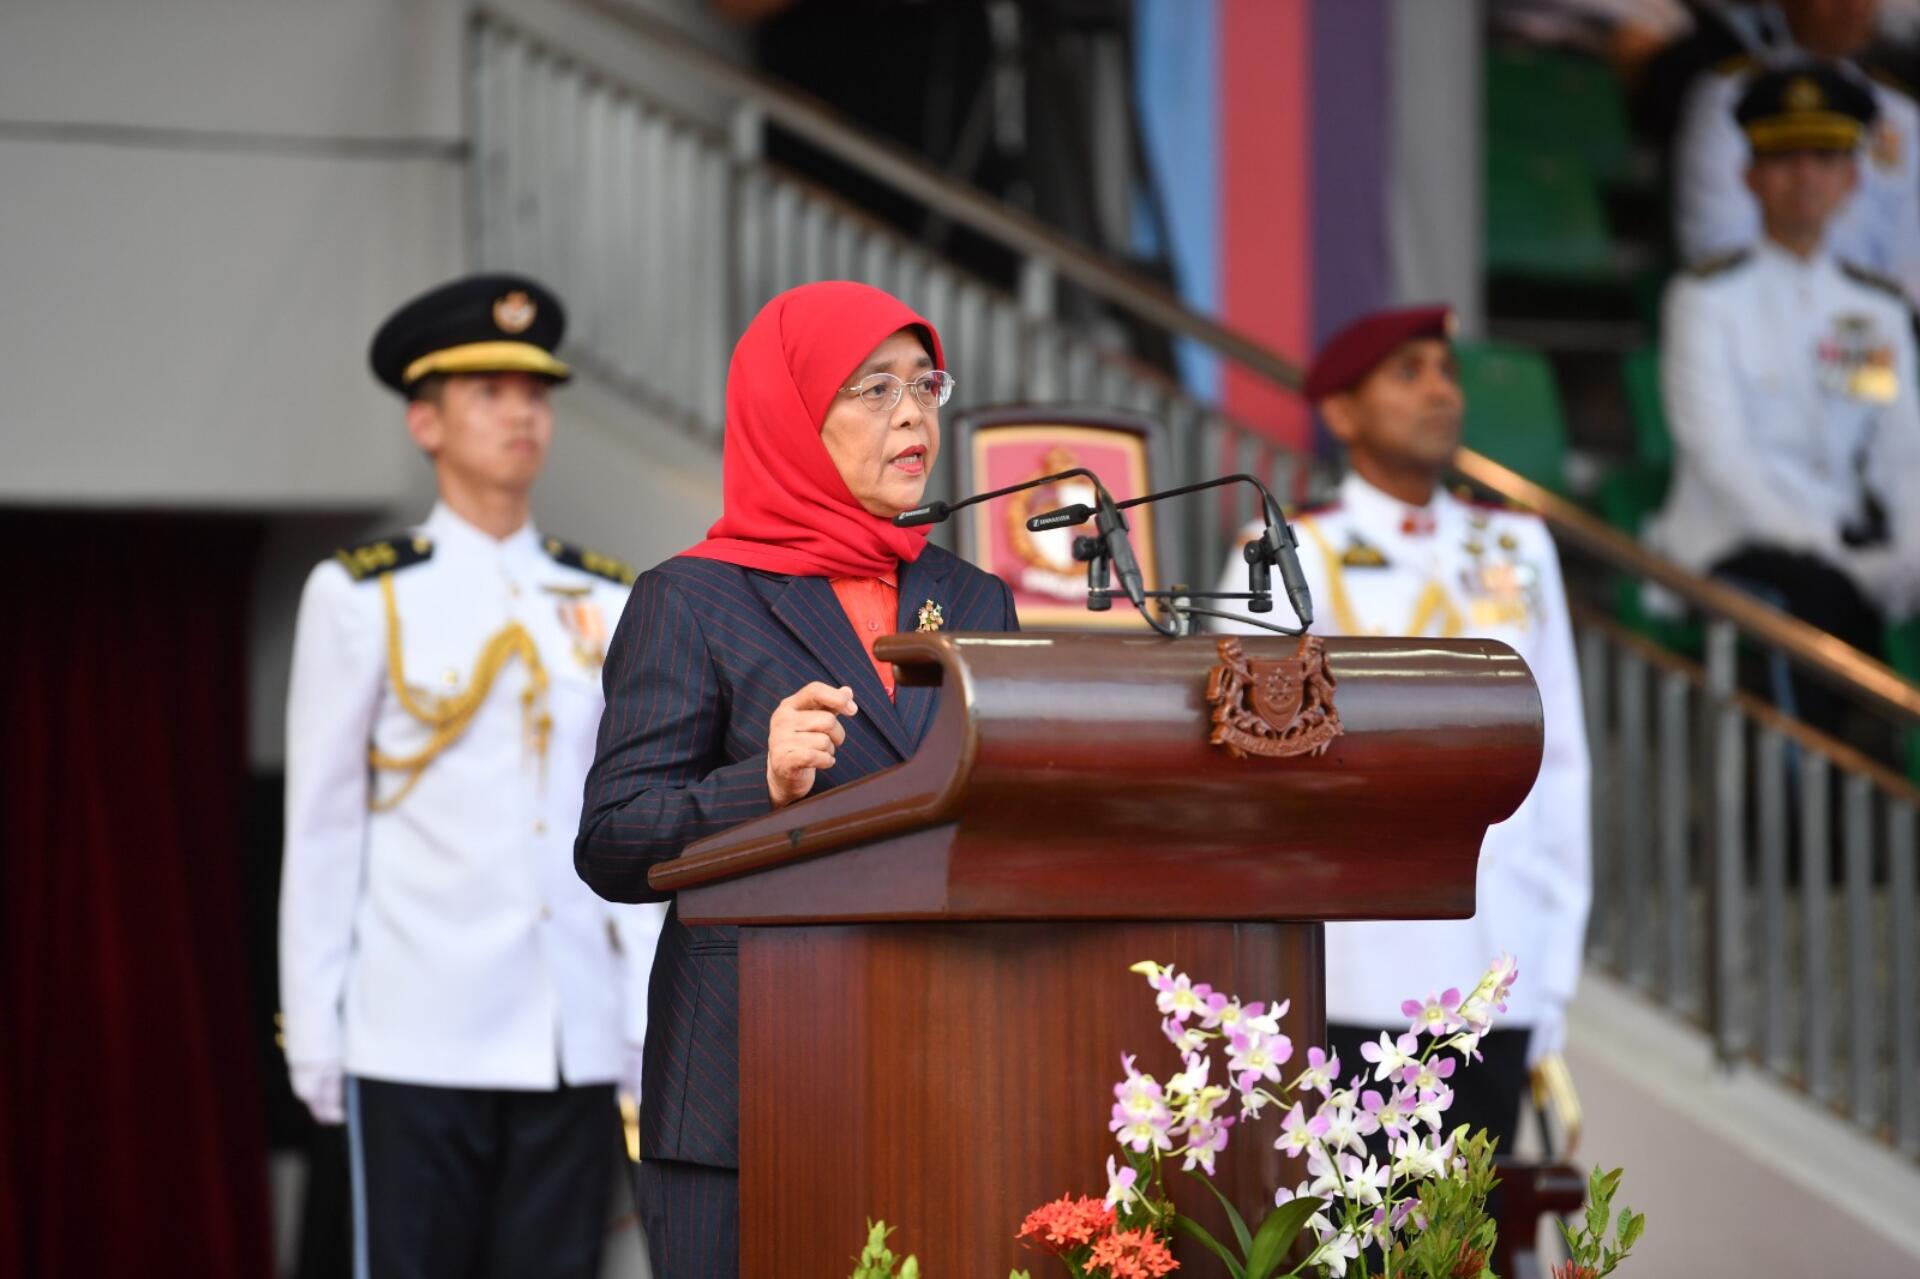 President Halimah Yacob speaking at the DIS Inauguration Parade this evening.